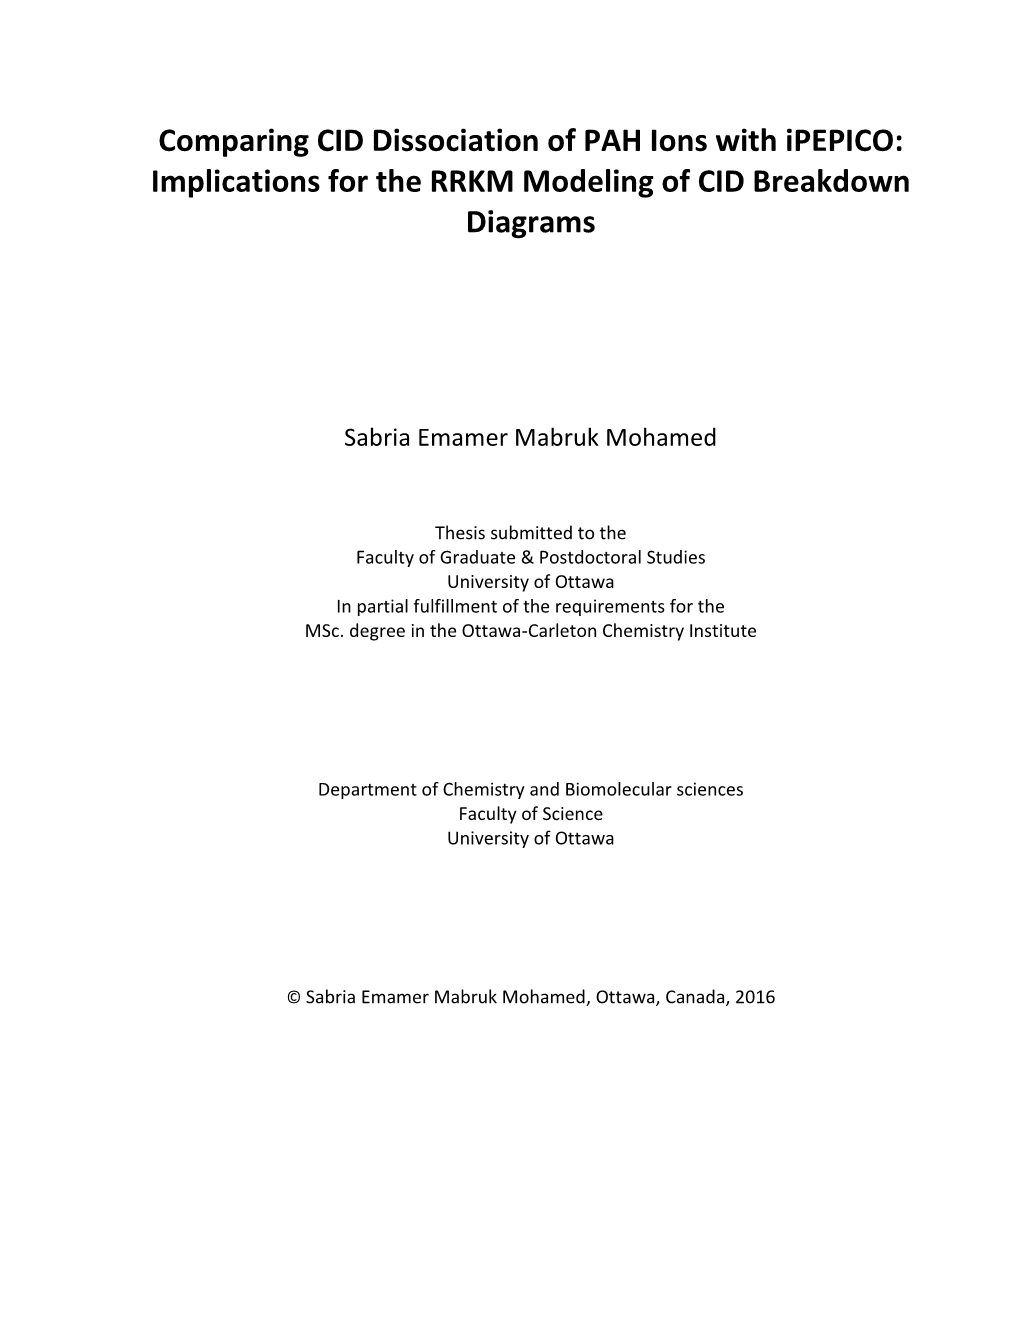 Implications for the RRKM Modeling of CID Breakdown Diagrams